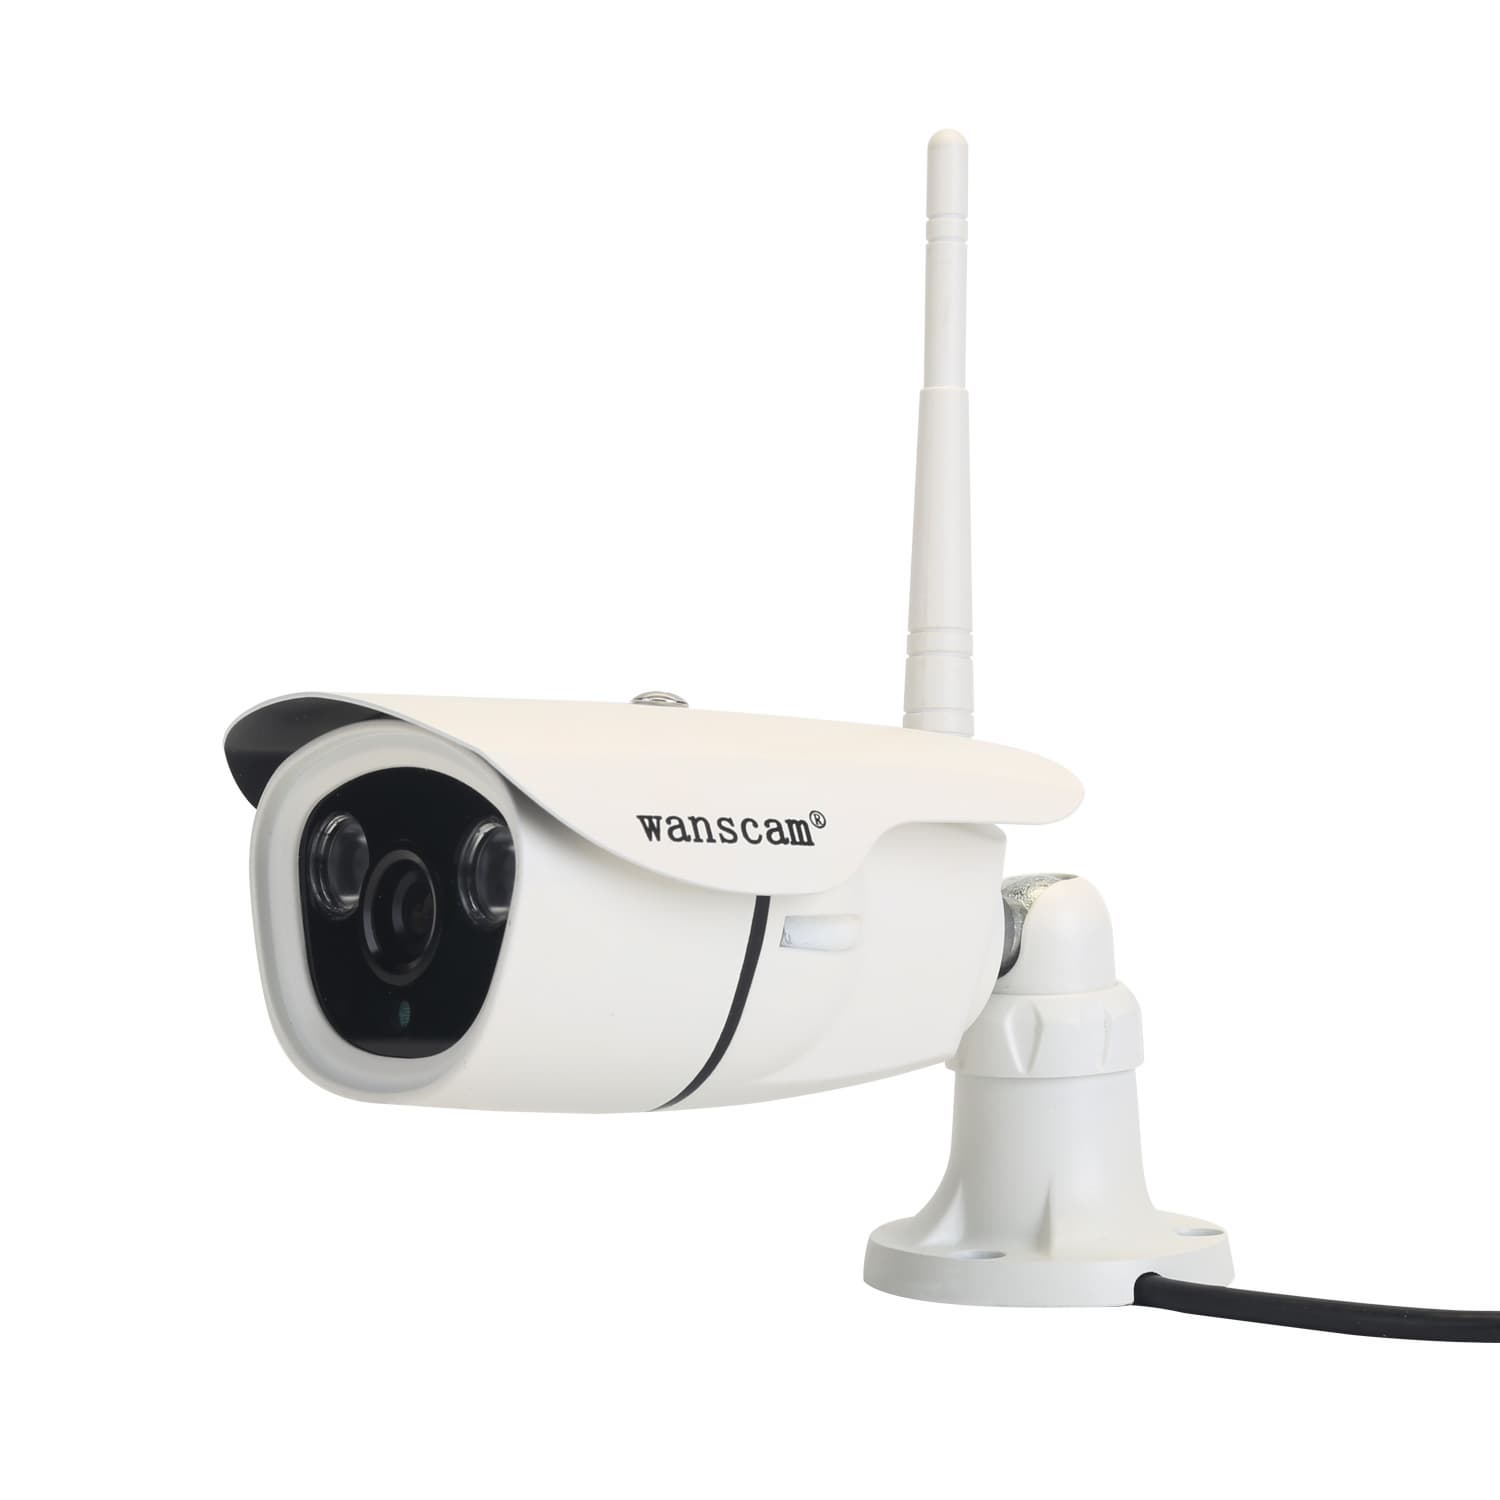 Wanscam HW0042 960P HD motion detection wireless onvif